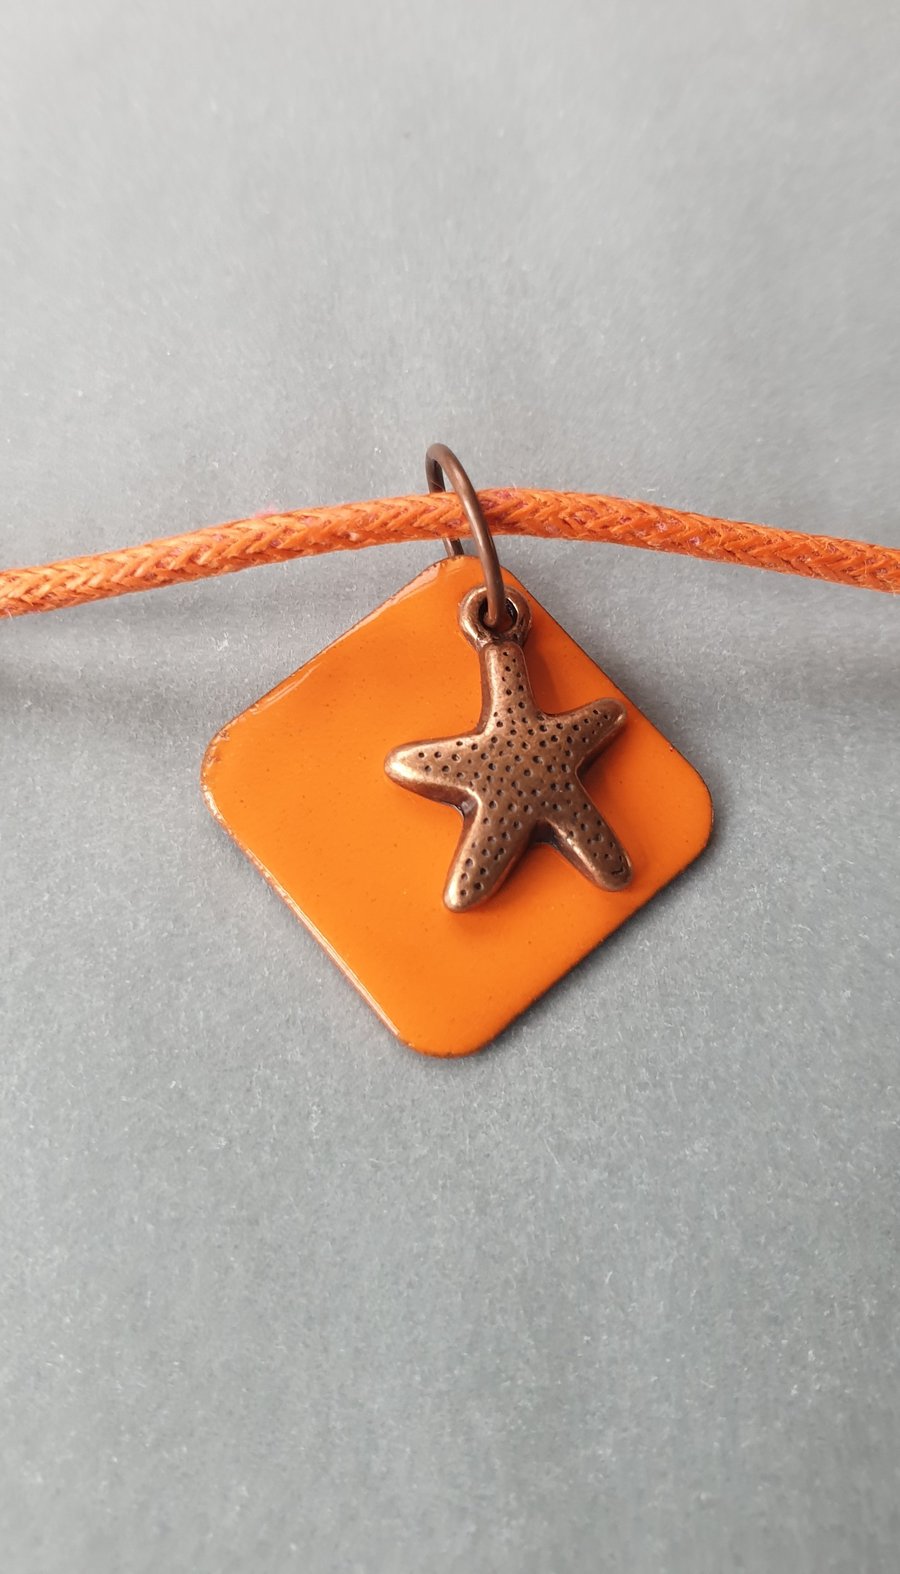 Seconds Sunday small orange sea star pendant